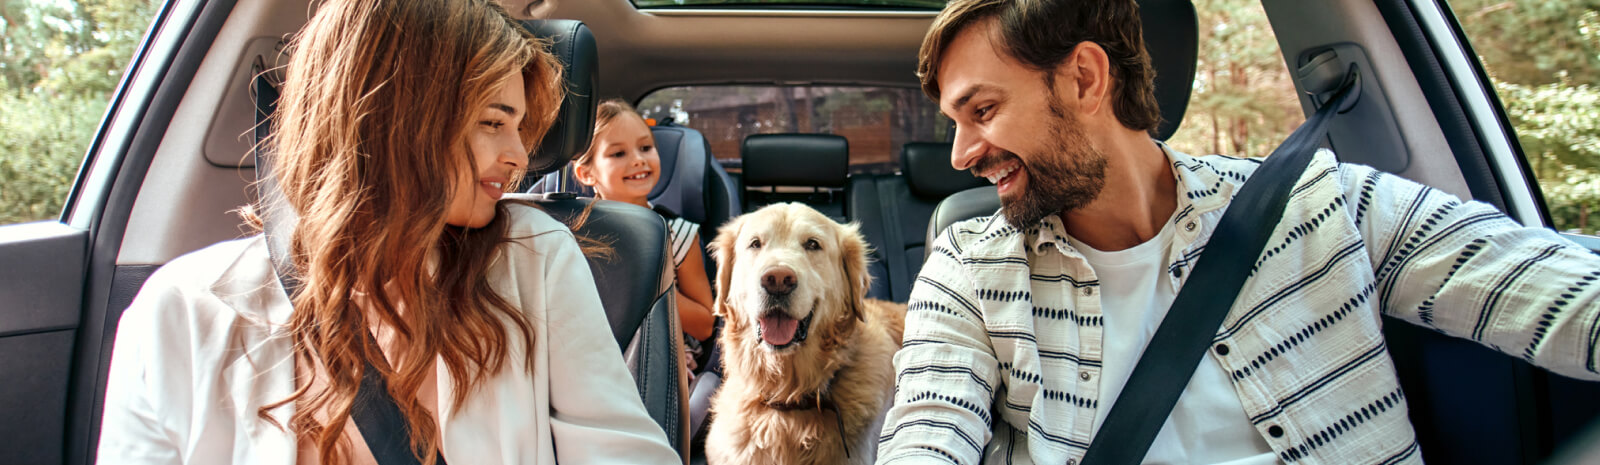 Family and dog inside a modern car